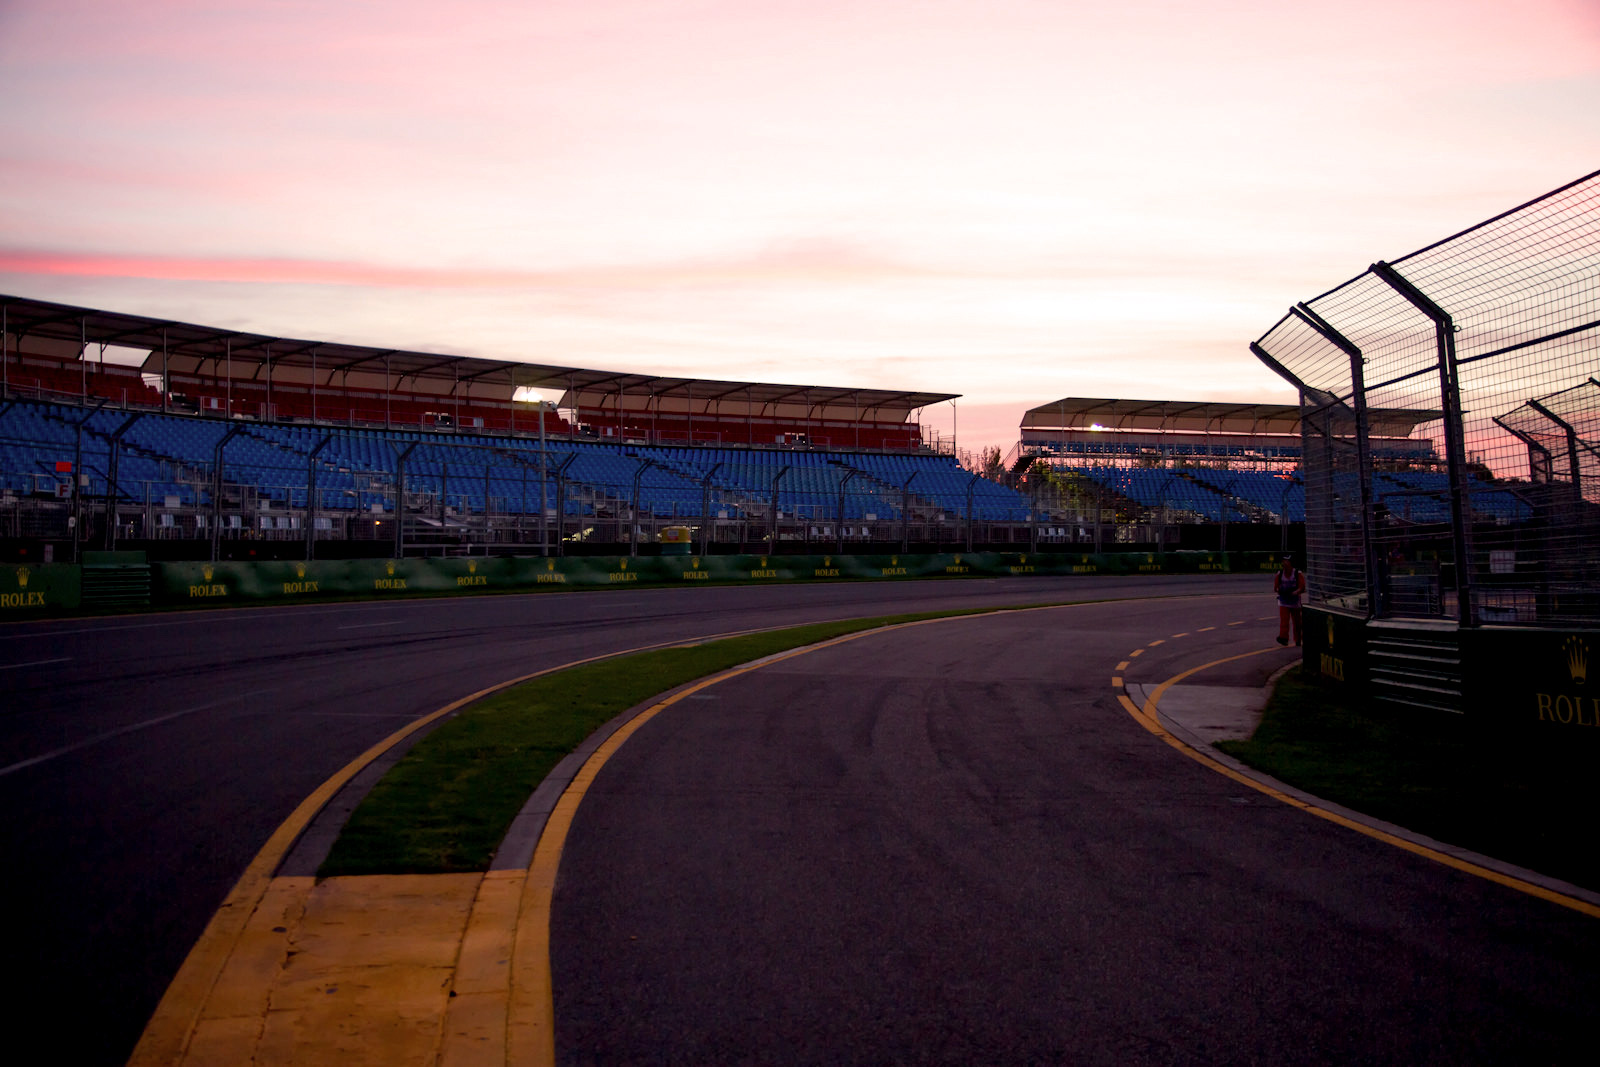 Foto do Circuito de Formula 1 em Albert Park, Melbourne - By J.H. Sohn from Melbourne, Wikipaedia